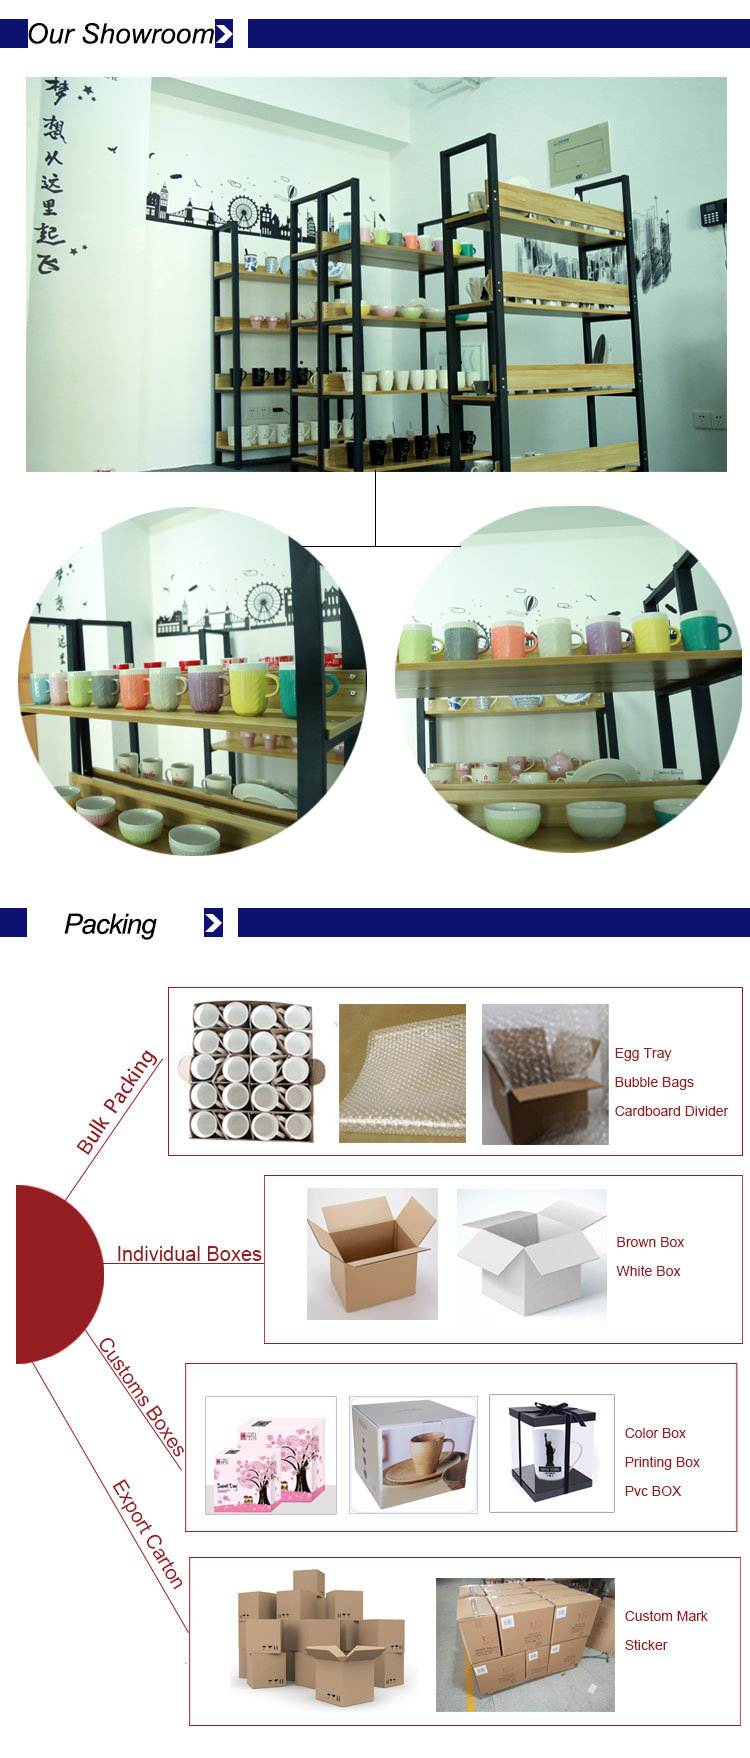 Wholesale Promotion Creative Design Porcelain Ceramic Tea Cup